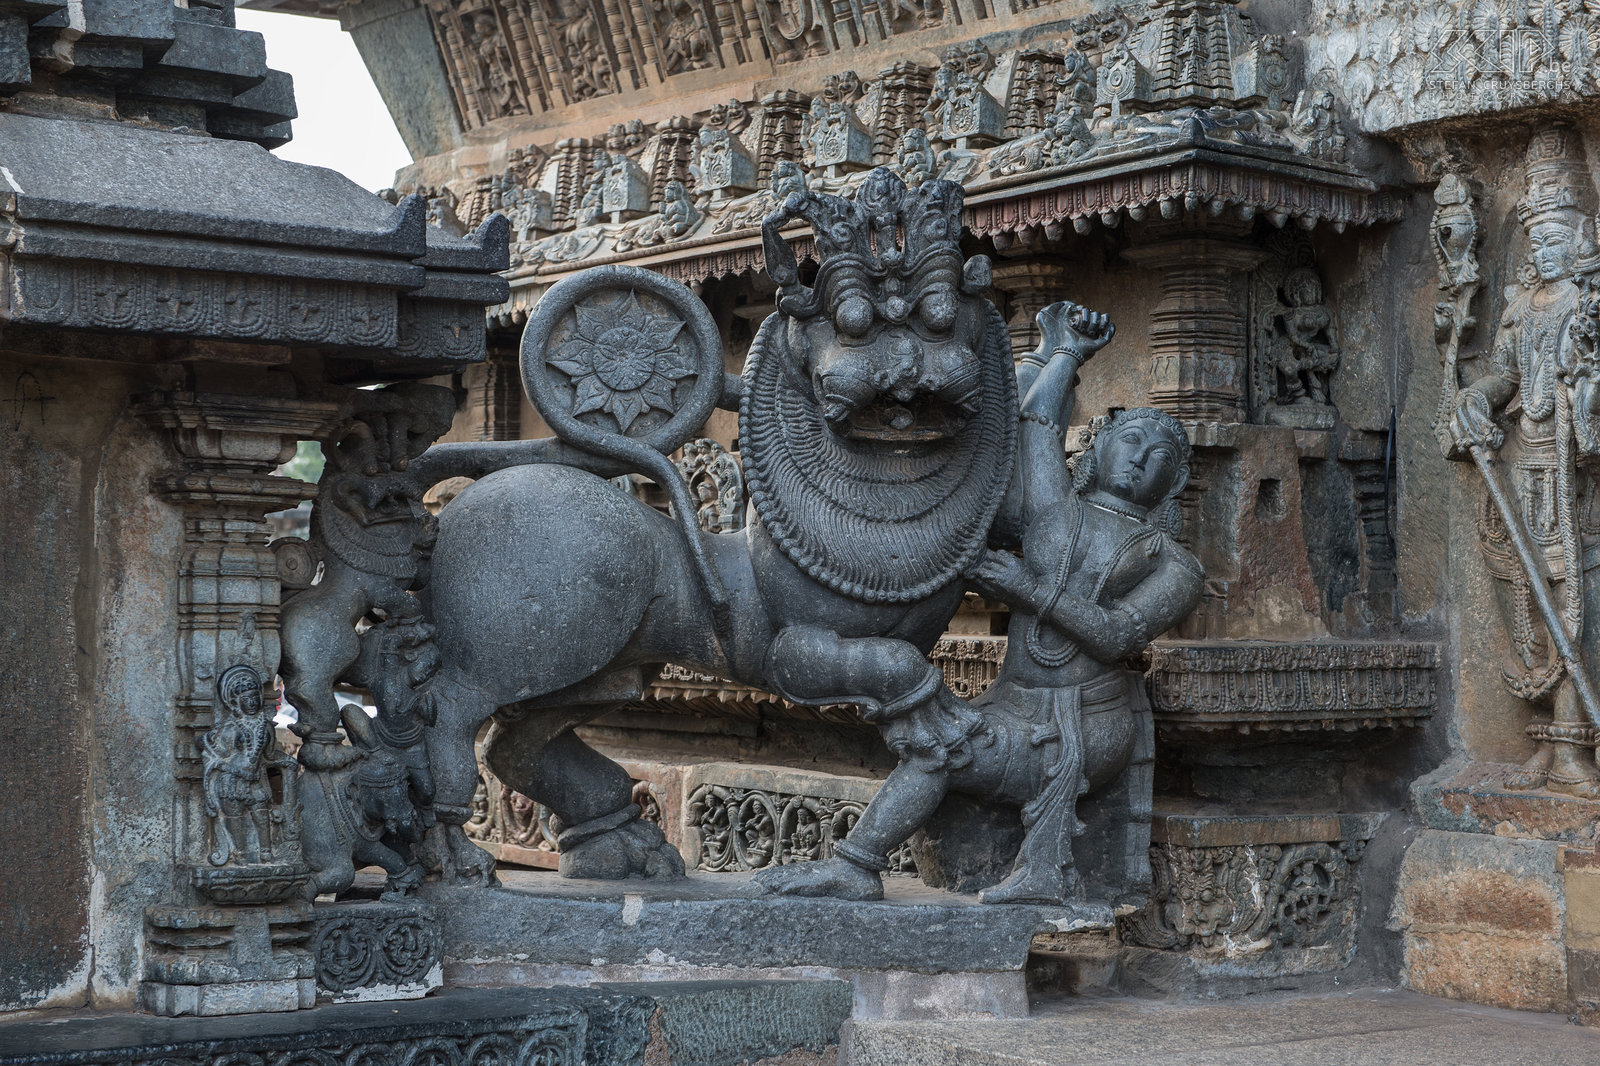 Belur Indrukwekkend standbeeld bij de ingang van de hoodftempel in Belur in Karnataka. Stefan Cruysberghs